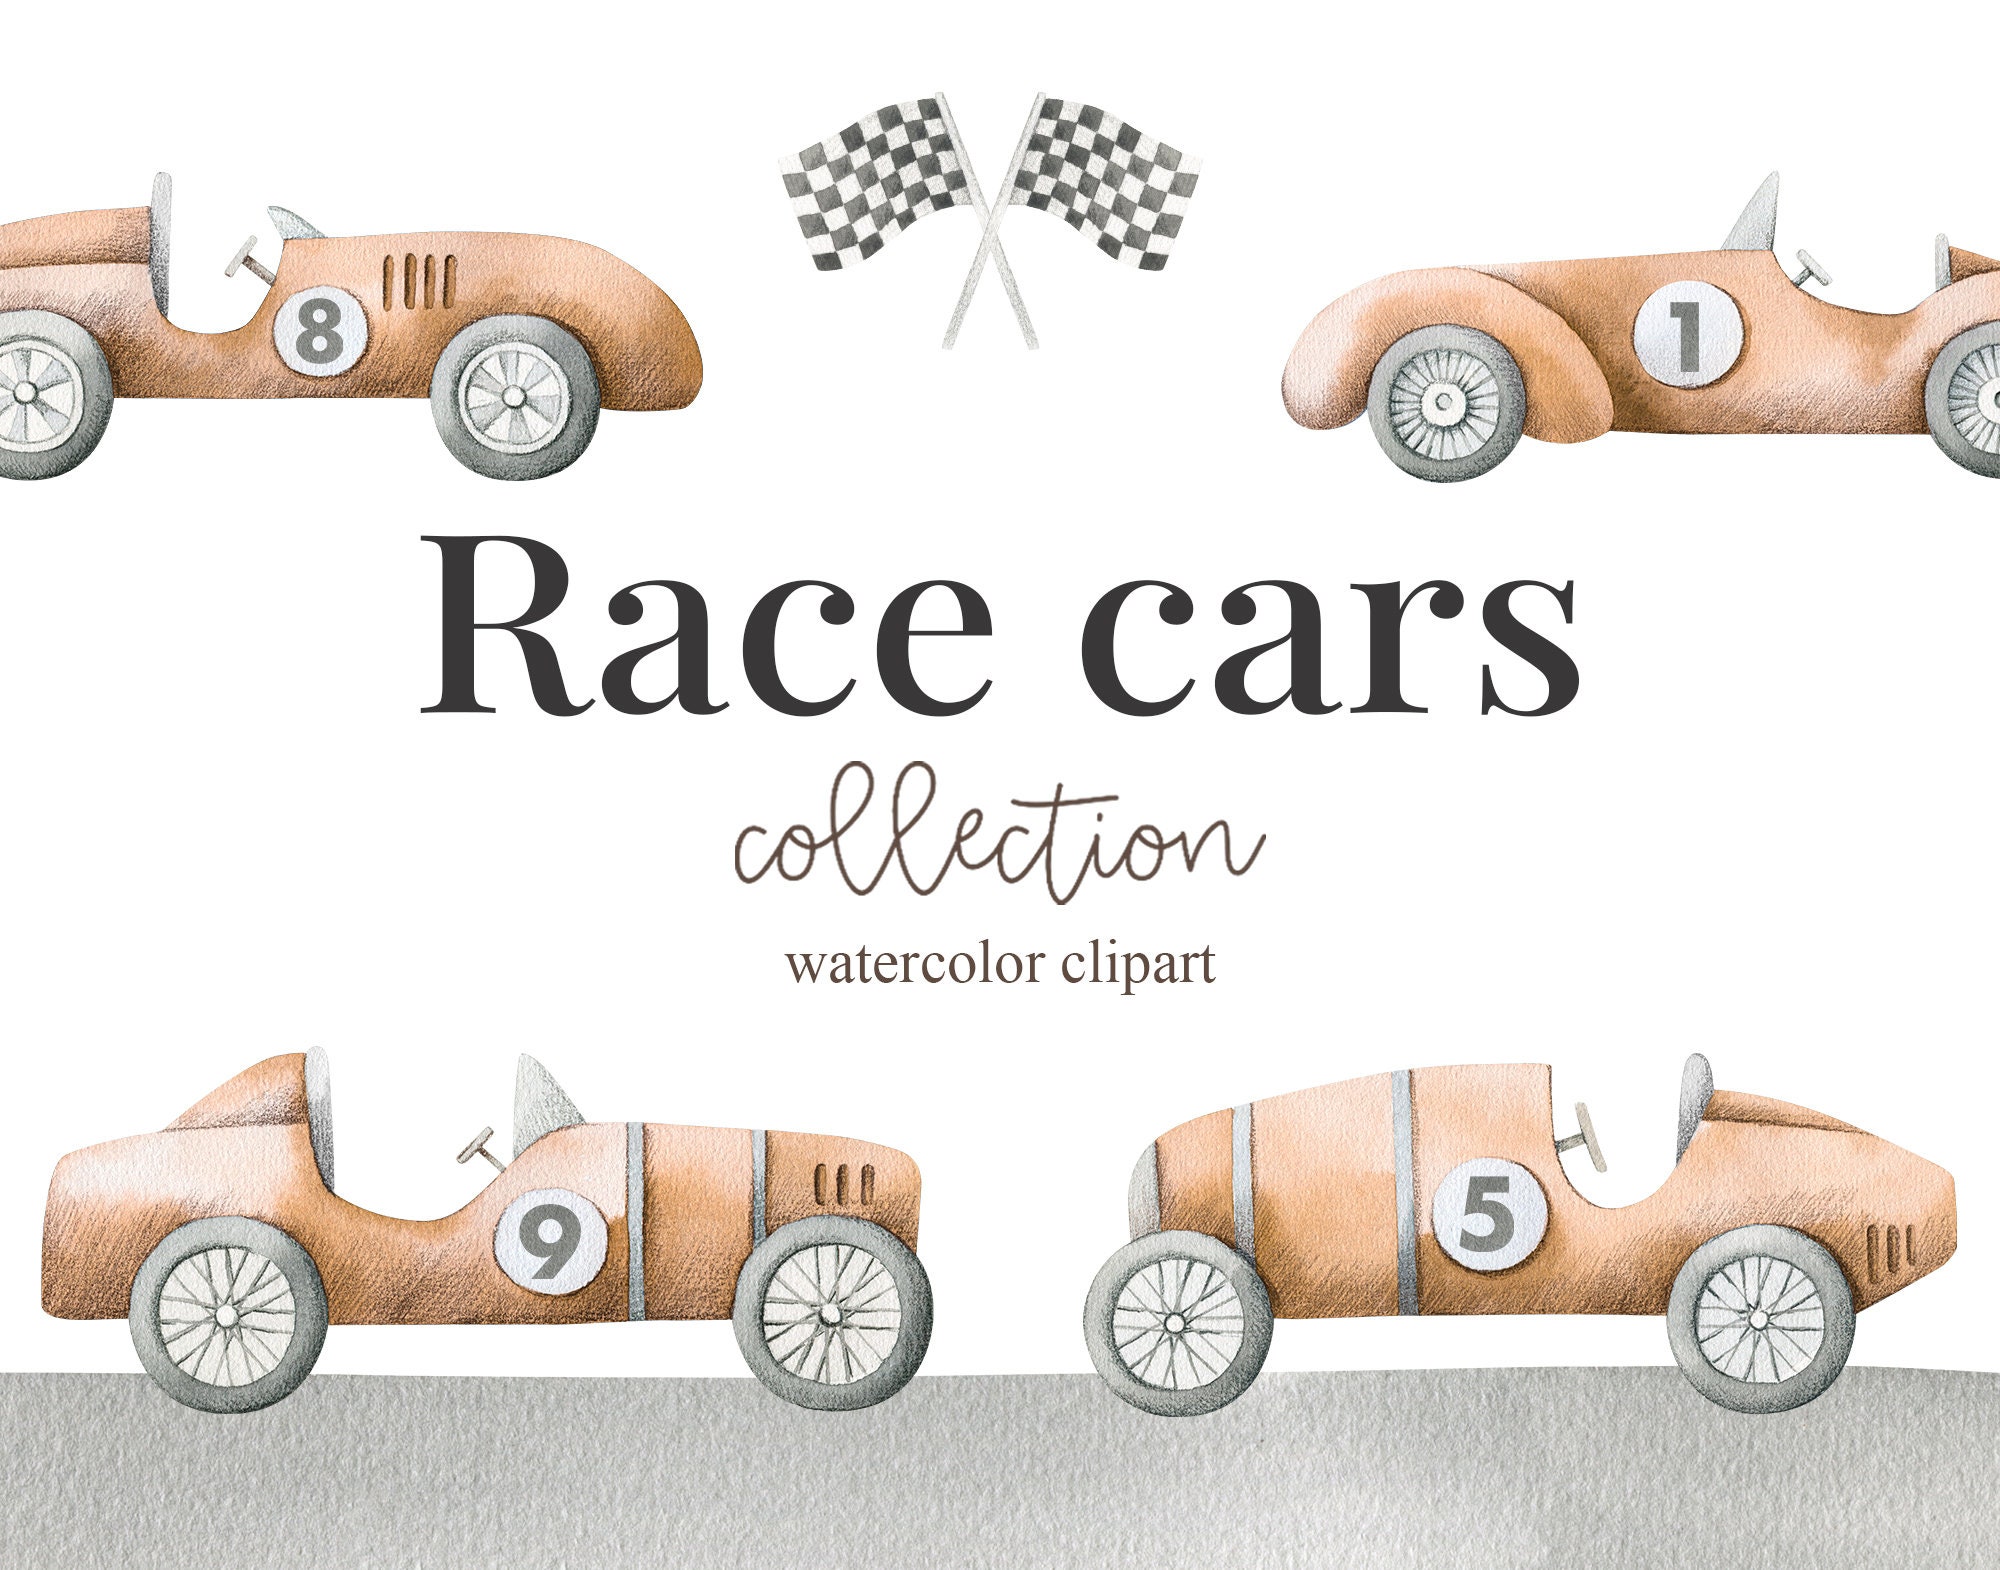 Racecars Kids Gift Wrap Rolls 5 ft x 30 in (8 Pieces)